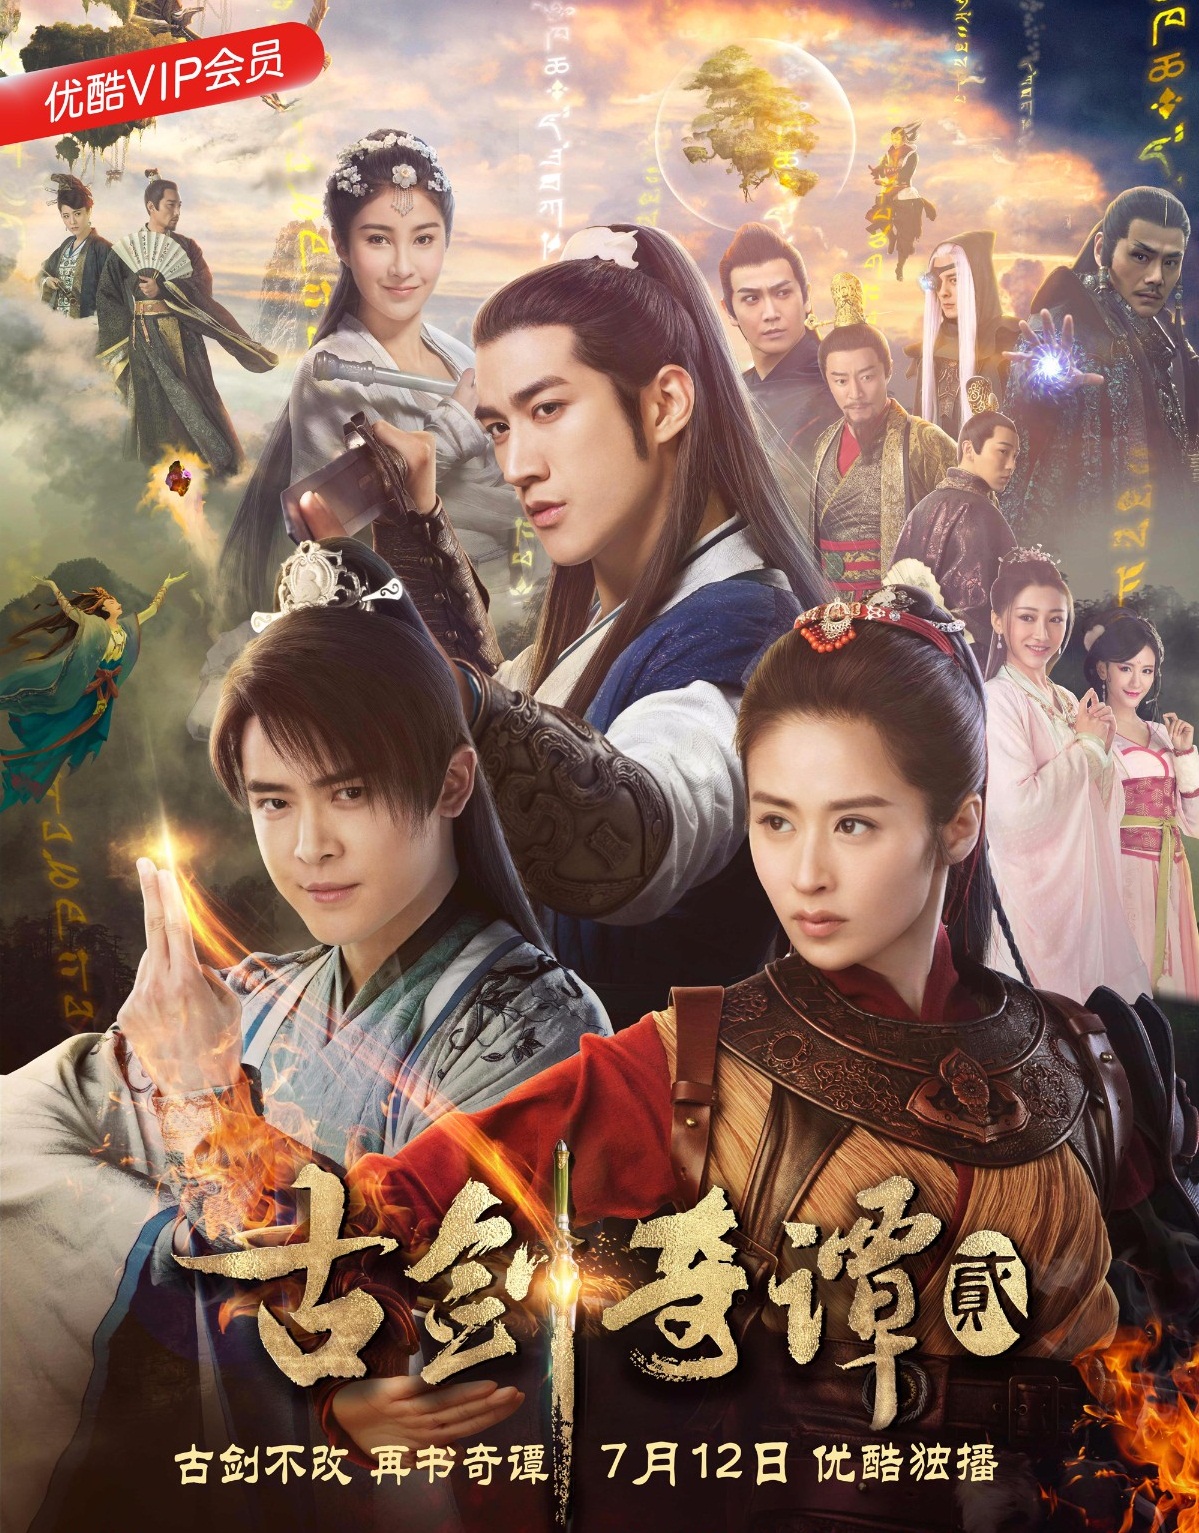 Banner Phim Cô Kiếm Kỳ Đàm 2 (Swords of Legends 2)